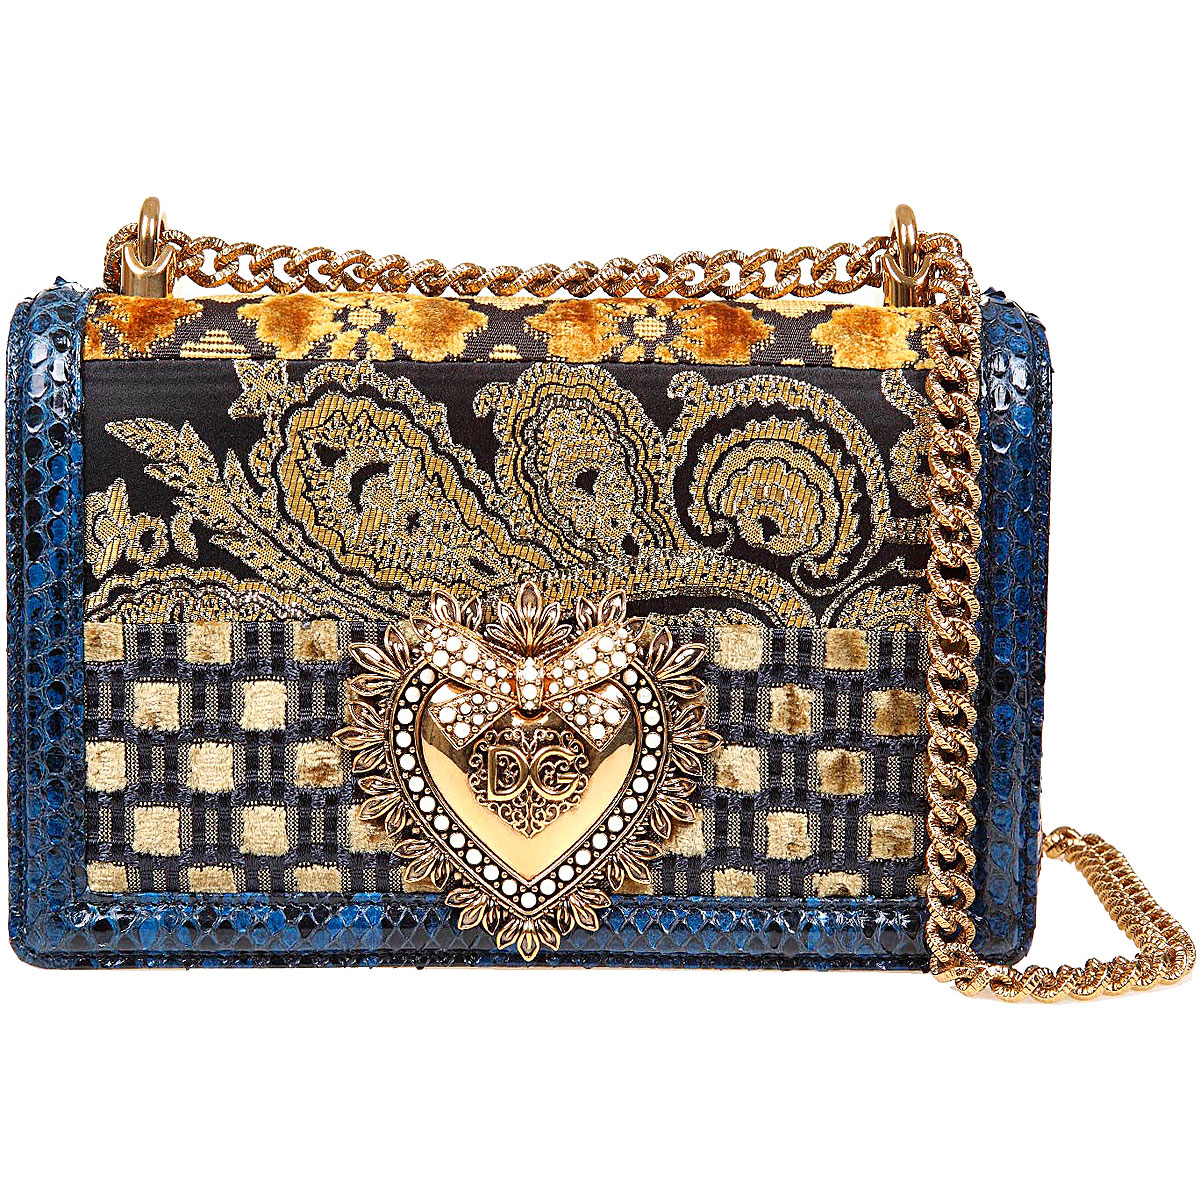 Handbags Dolce & Gabbana, Style code: bb6877-ax813-80999